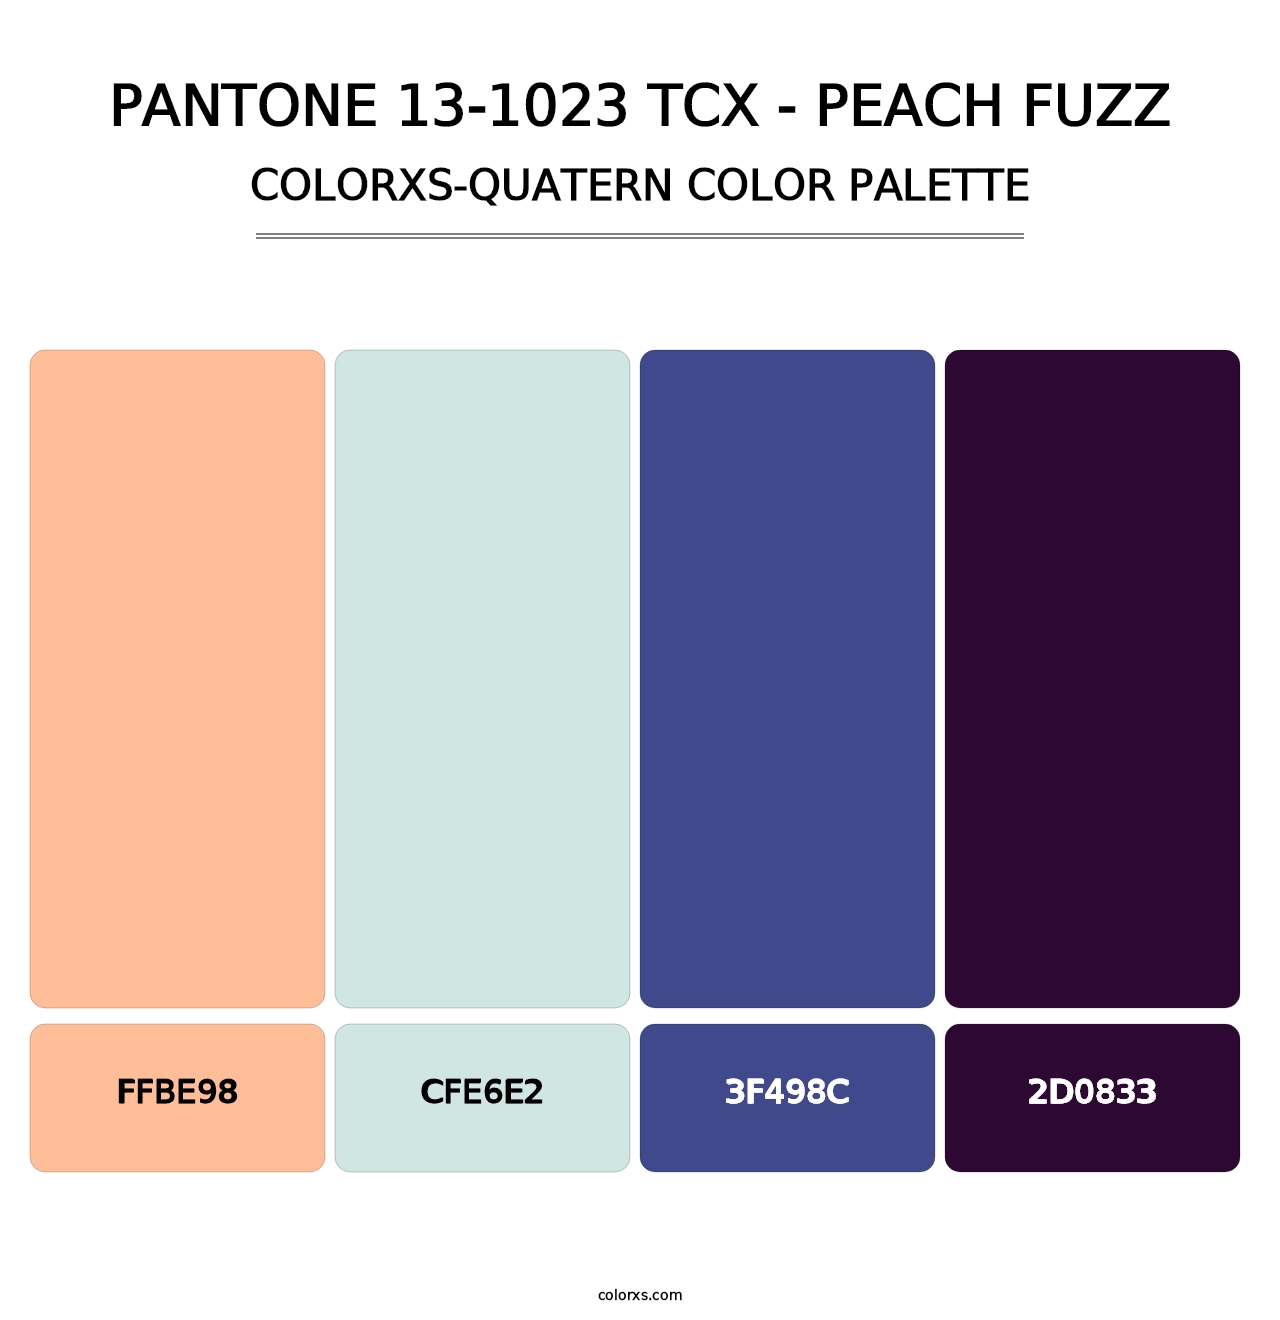 PANTONE 13-1023 TCX - Peach Fuzz - Colorxs Quatern Palette